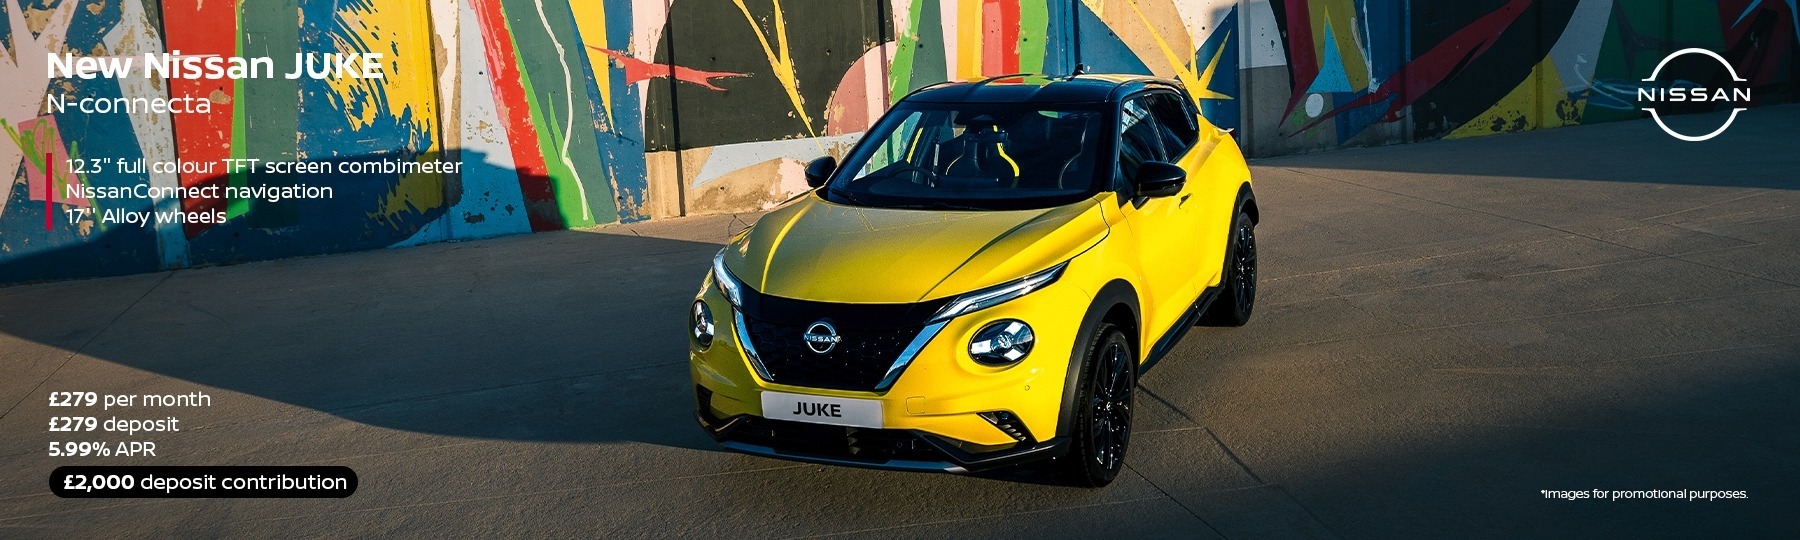 Nissan Juke New Car Offer